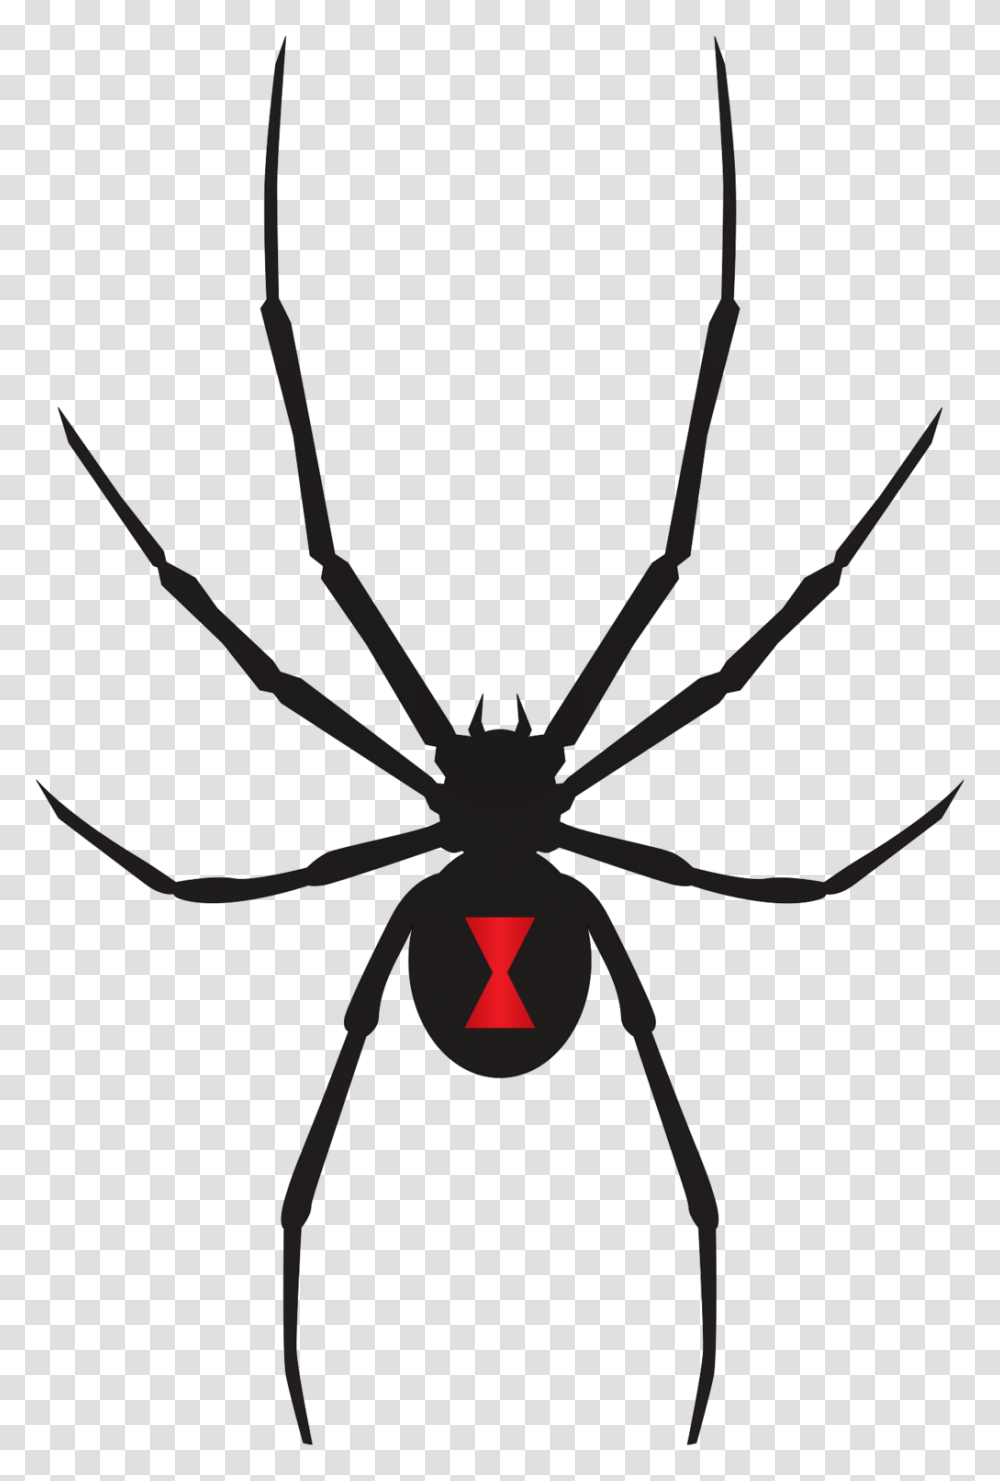 Black Widow Spider Clip Art, Invertebrate, Animal, Insect, Arachnid Transparent Png